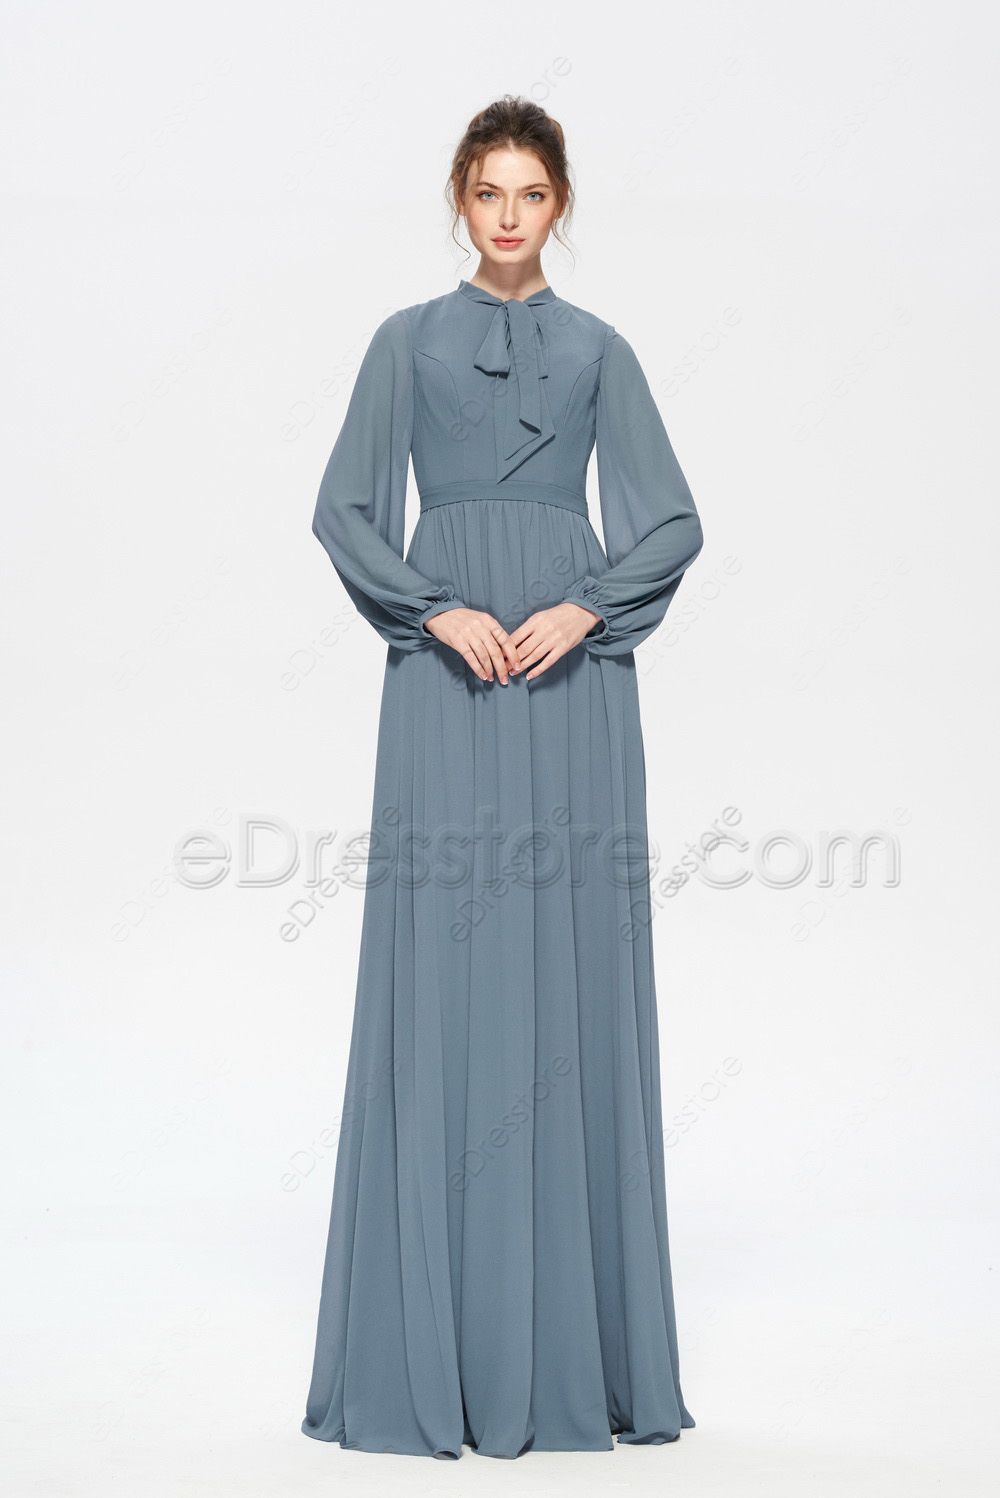 Modest Mormon Dusty Blue Bridesmaid Dresses Long Sleeves | eDresstore